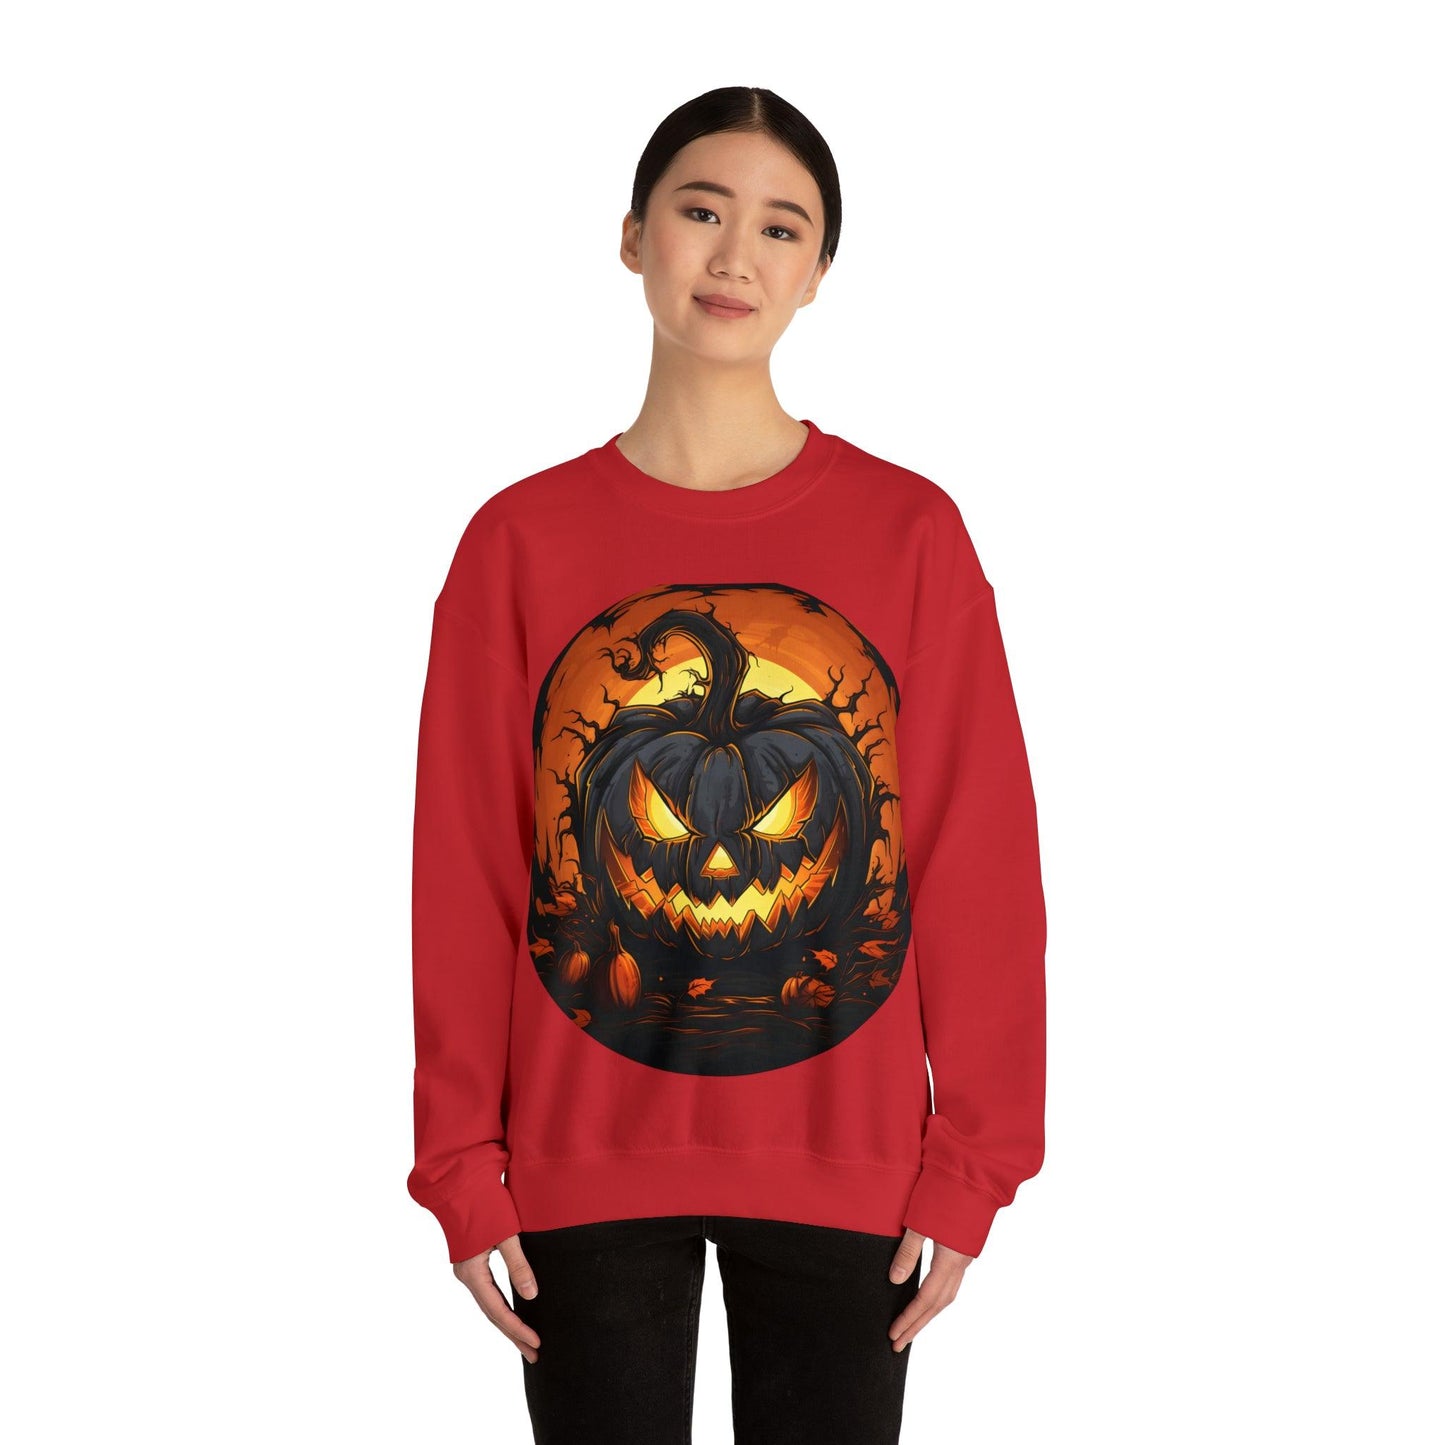 Scary Jack O Lantern Retro Halloween Sweatshirt: Your Spooky Style Statement - Giftsmojo